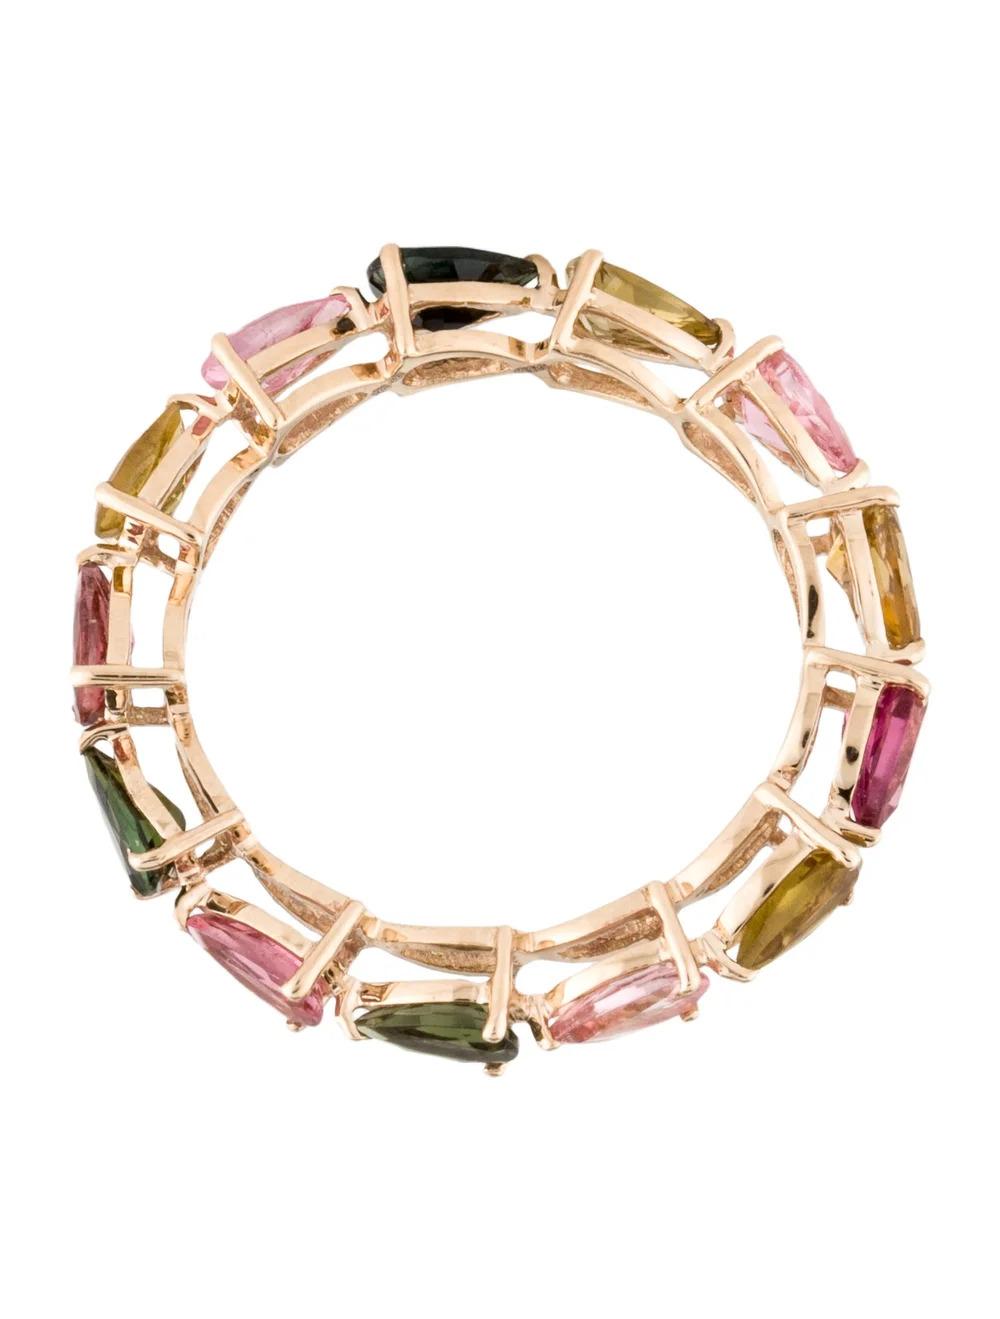 Women's 14K Tourmaline Eternity Band Ring Size 8 - Gemstone Fine Jewelry Vintage Style For Sale